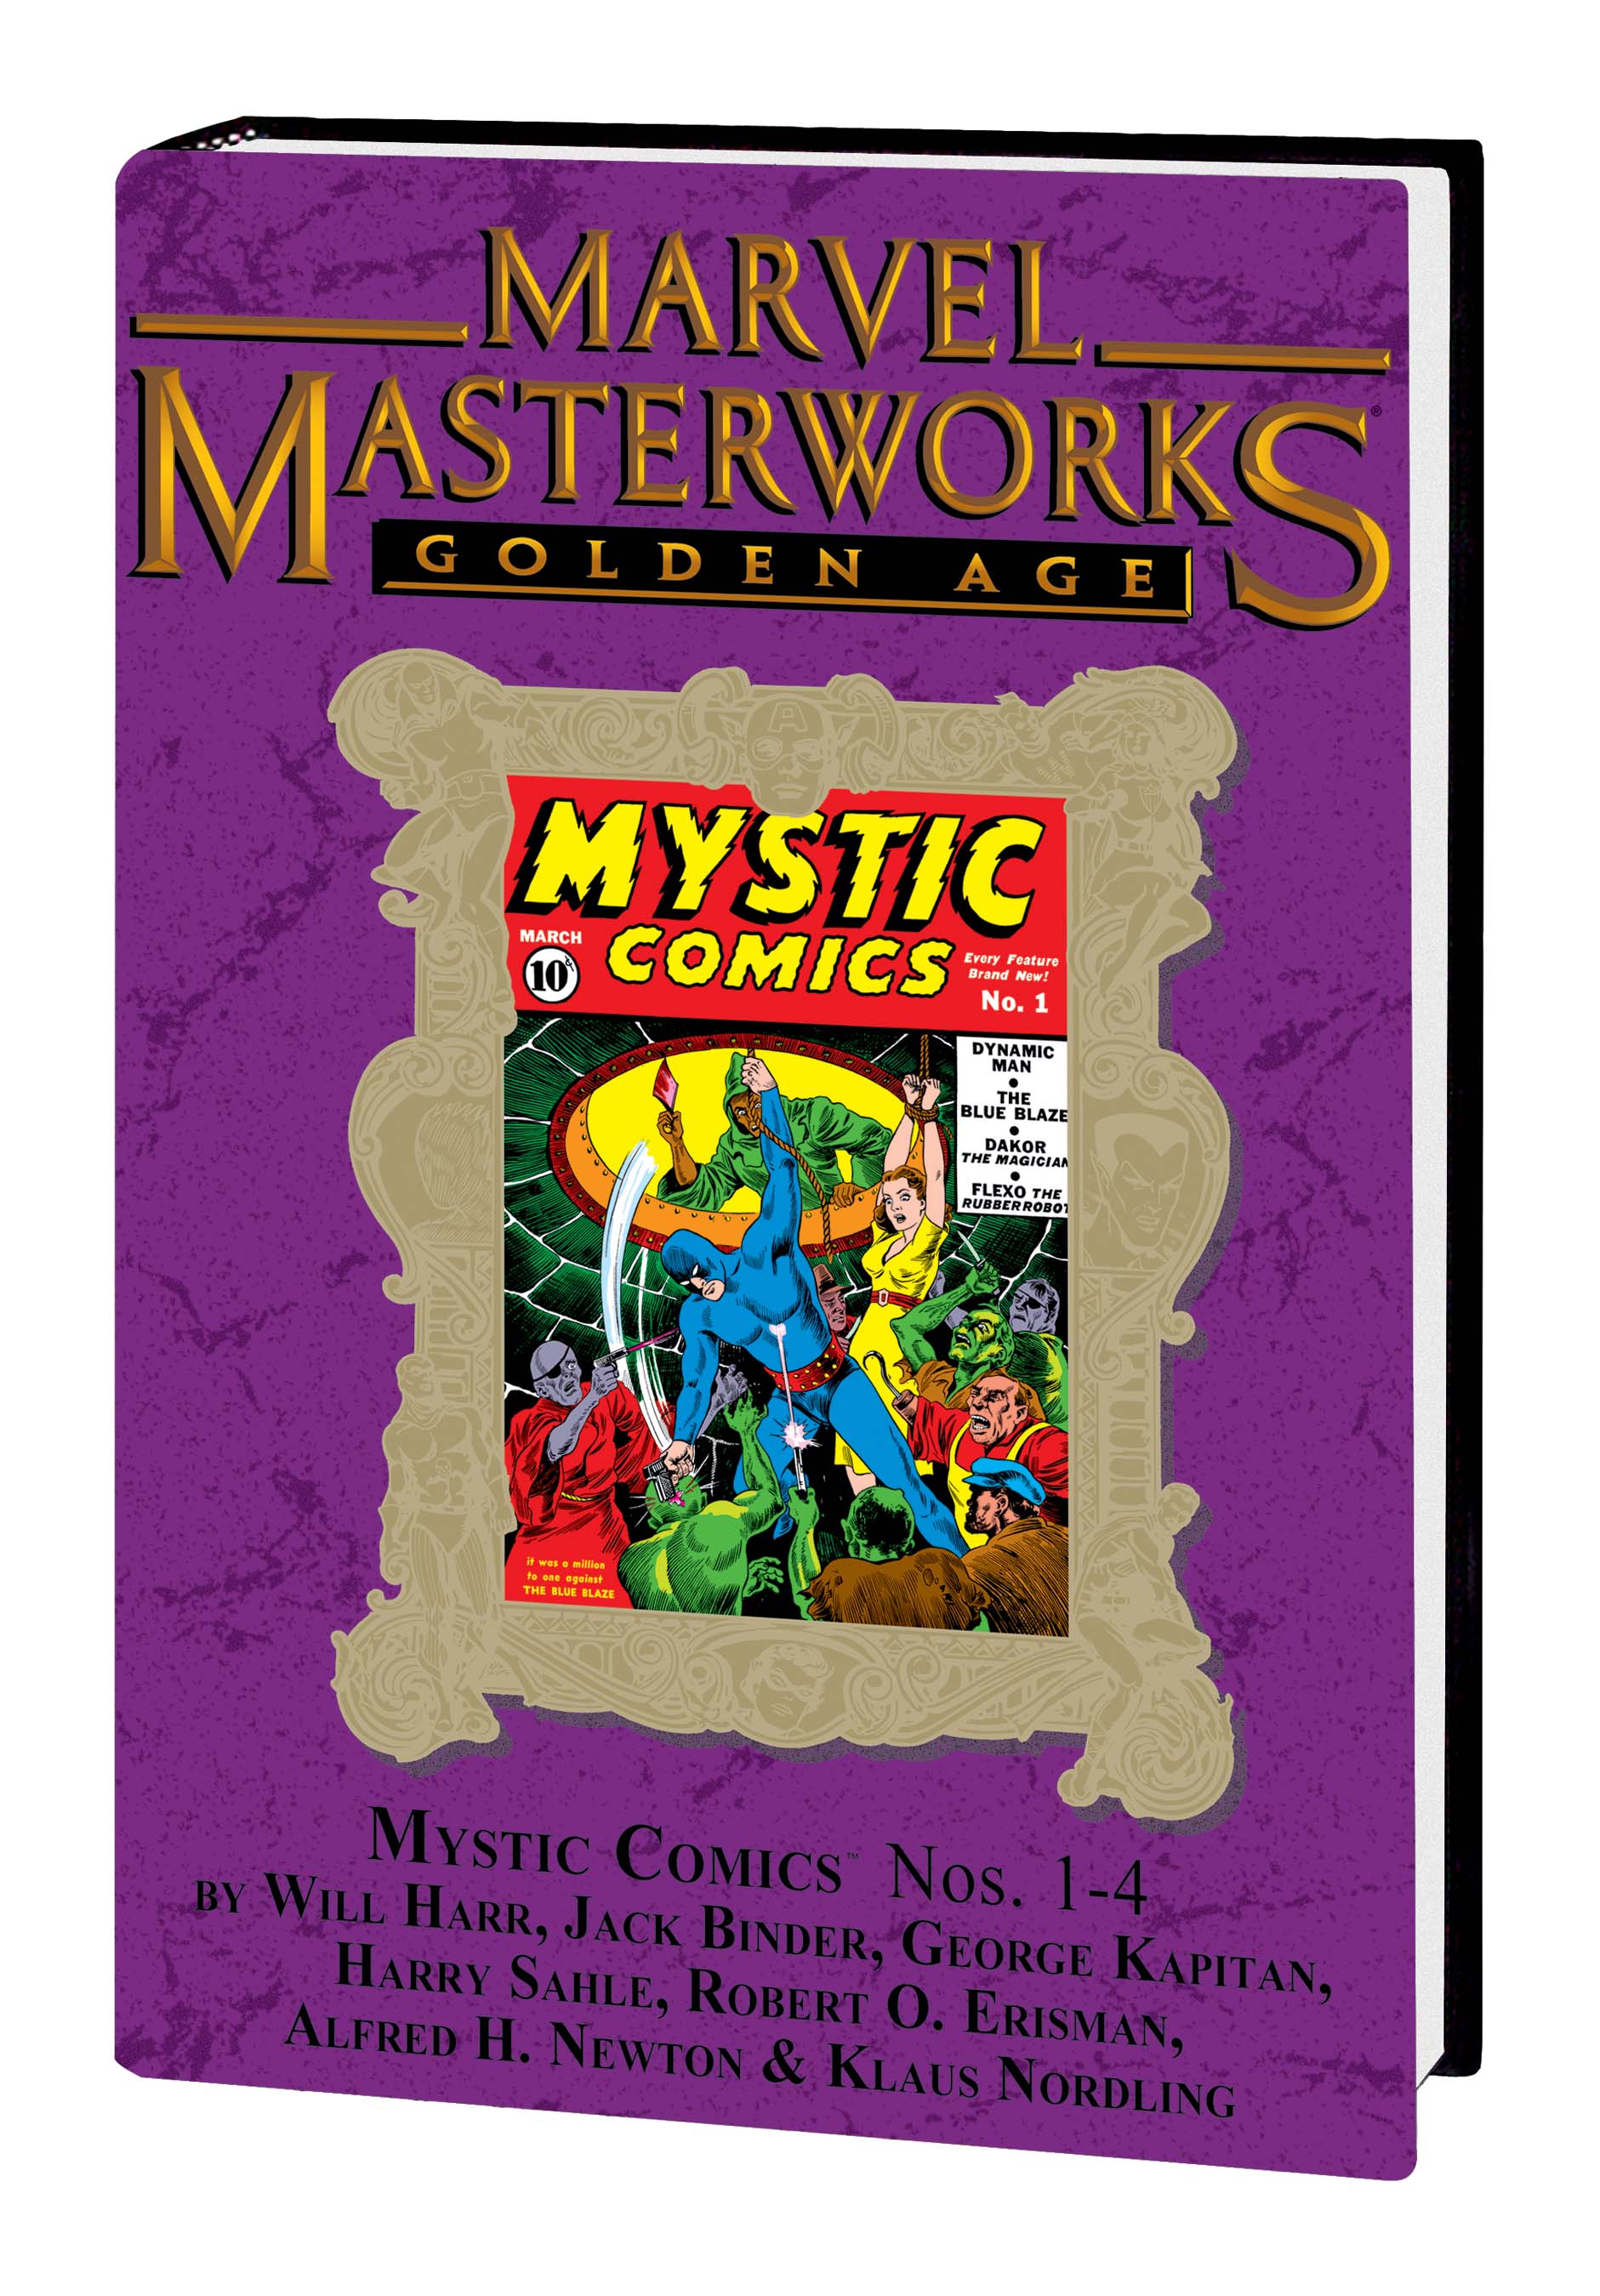 Marvel Masterworks: Golden Age Mystic Comics Vol. 1 (Variant) (Hardcover)